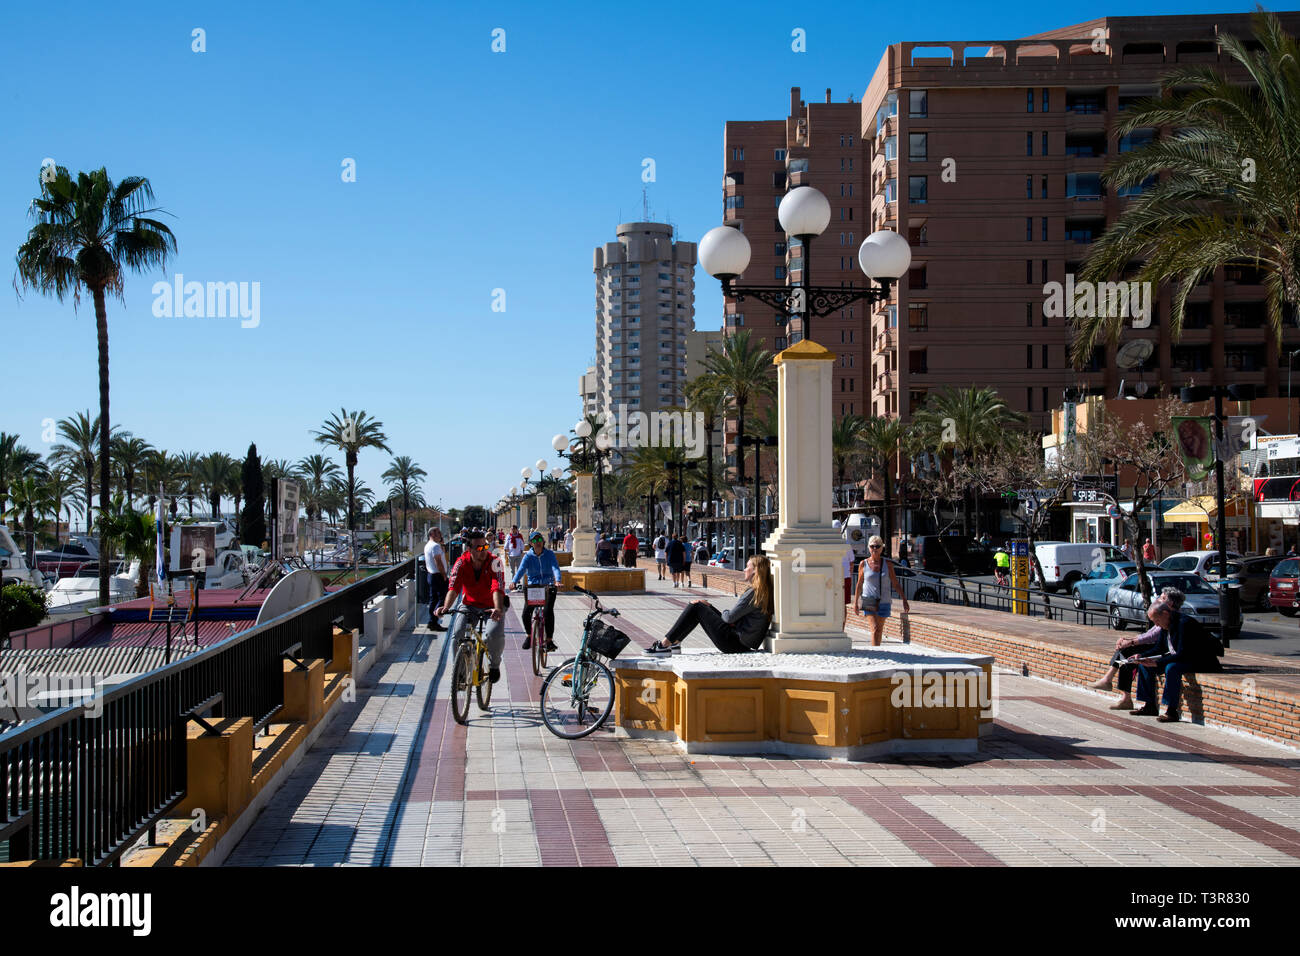 The Promenade at Fuengirola, Malaga, Spain Stock Photo